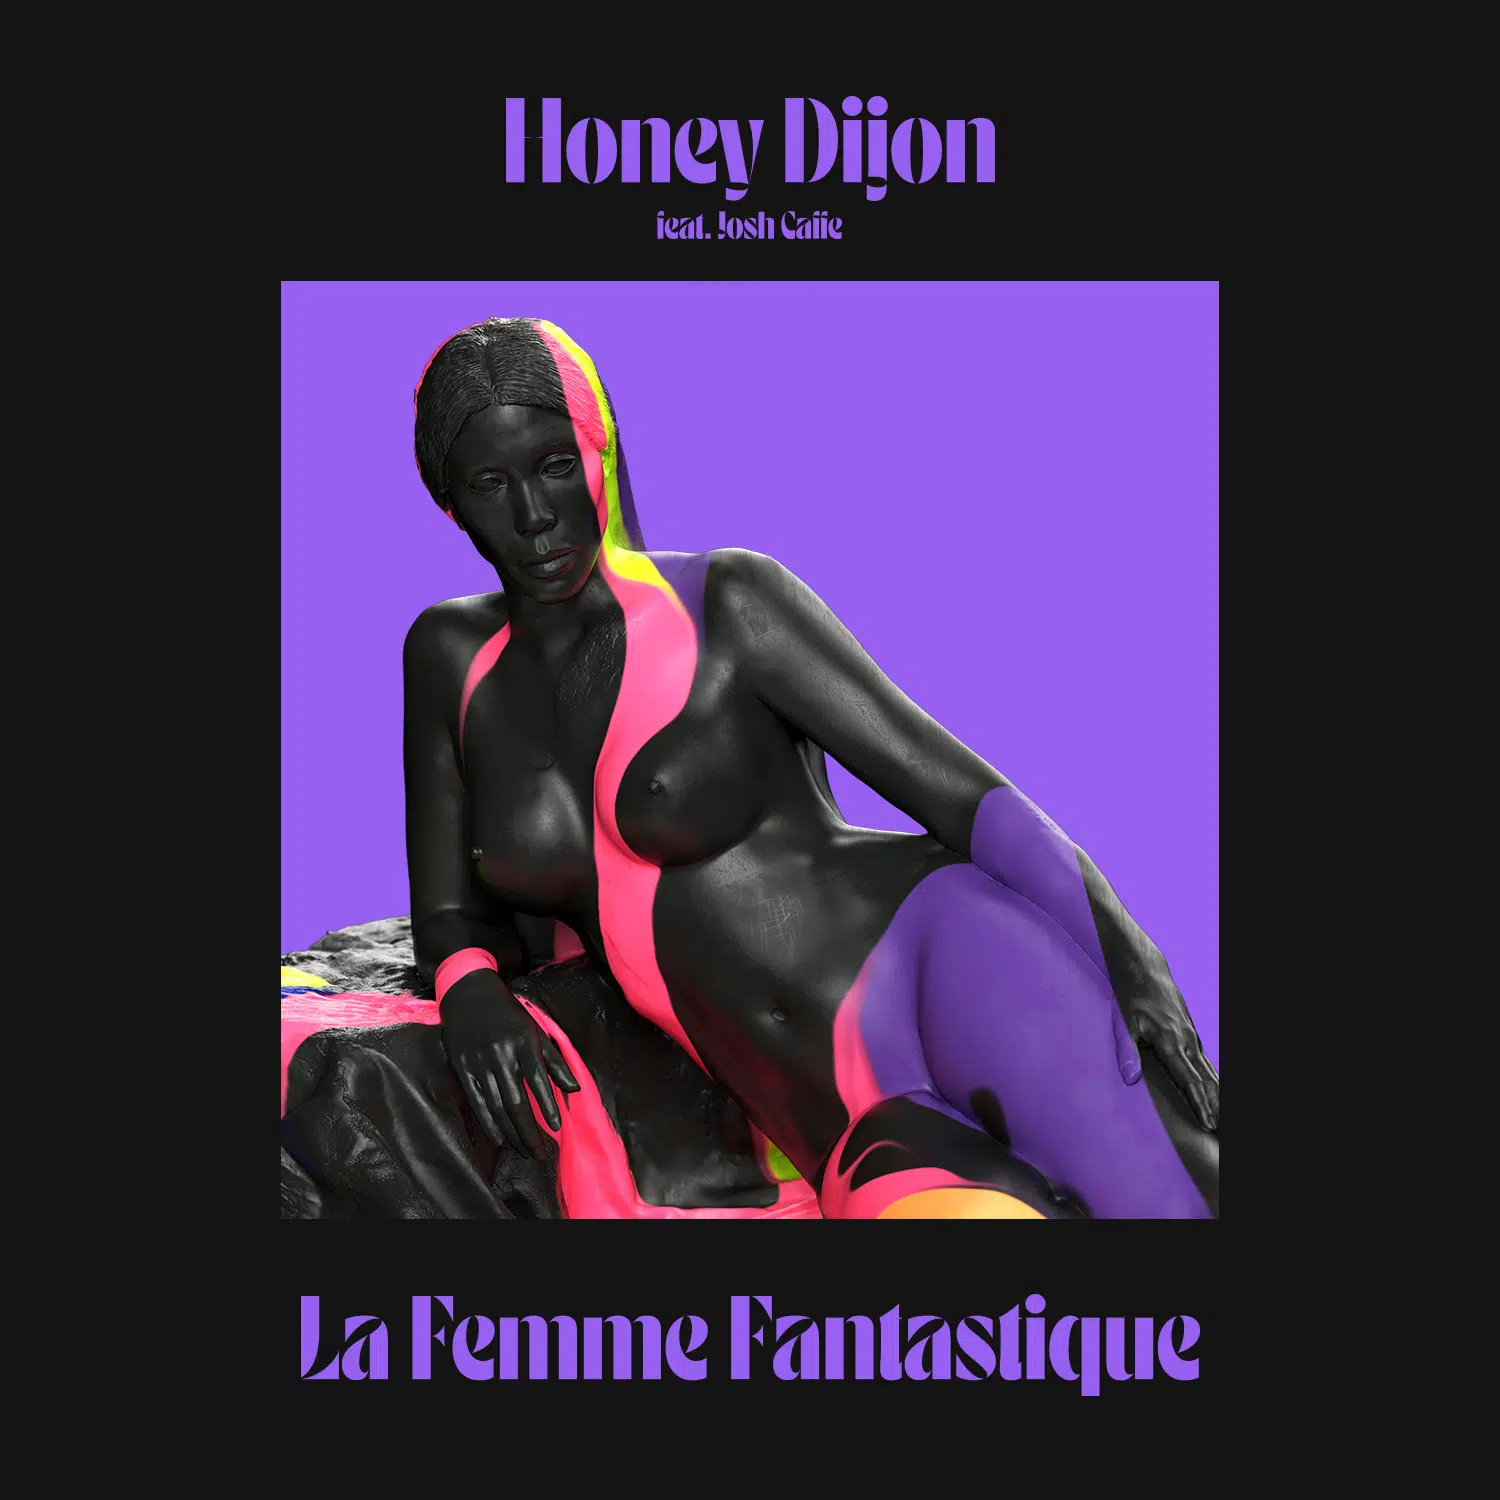 Honey Dijon ft Josh Caffe “La Femme Fantastique”